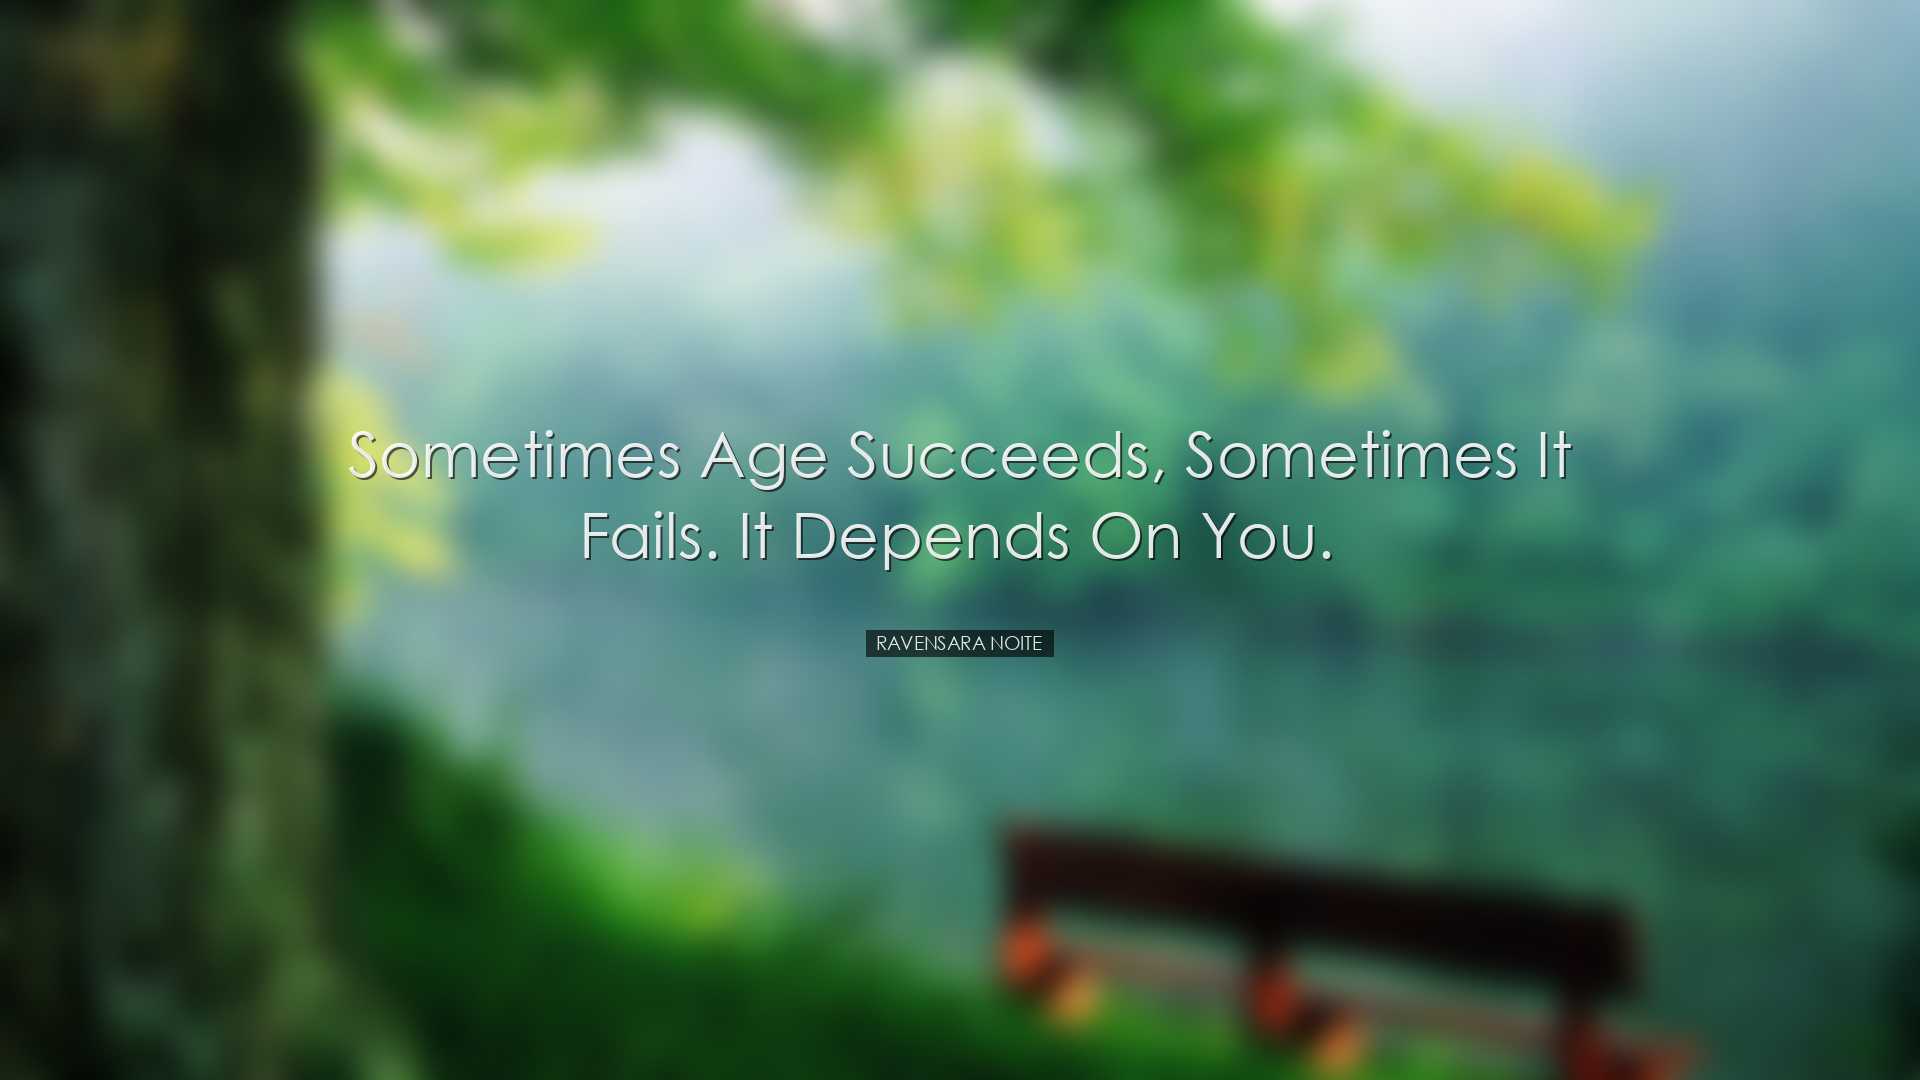 Sometimes age succeeds, sometimes it fails. It depends on you. - R